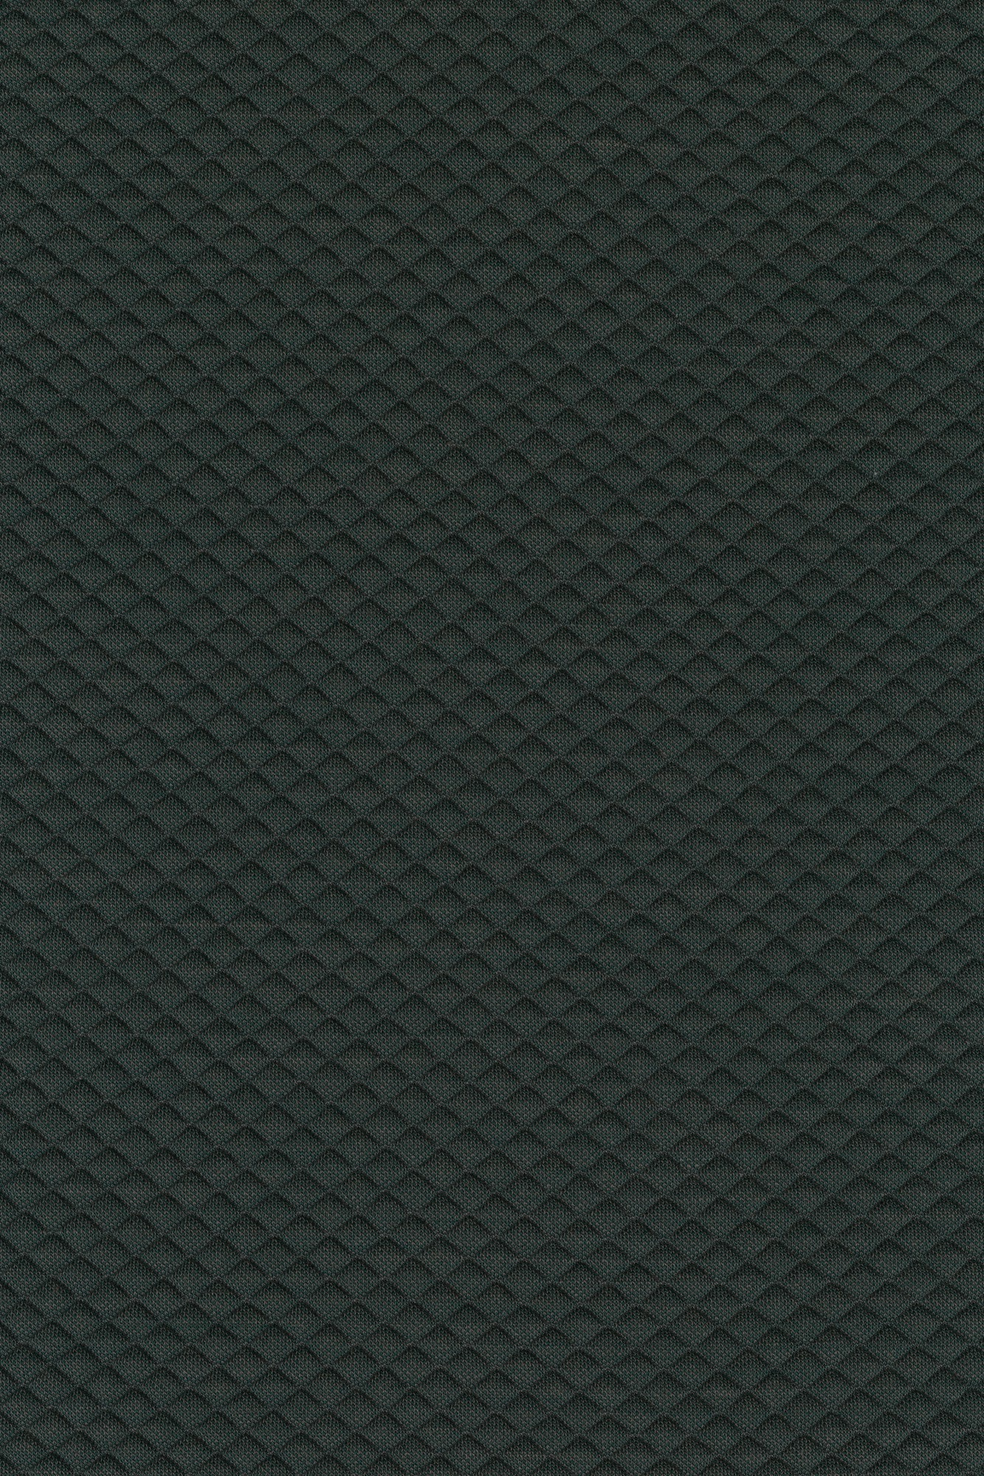 Fabric sample Mosaic 2 0972 green